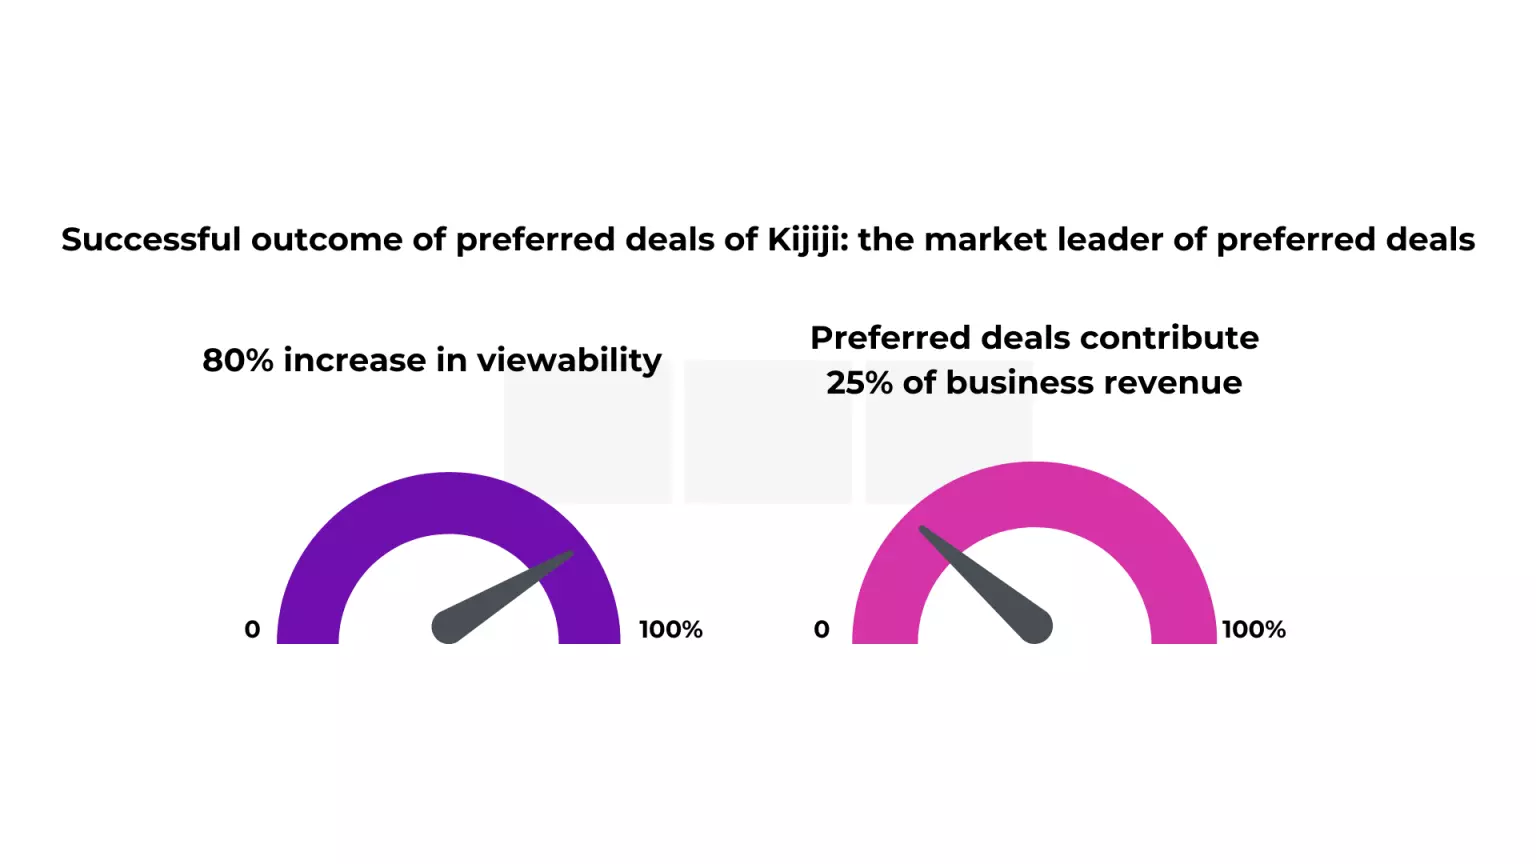 Successful outcome of preferred deals of kijiji